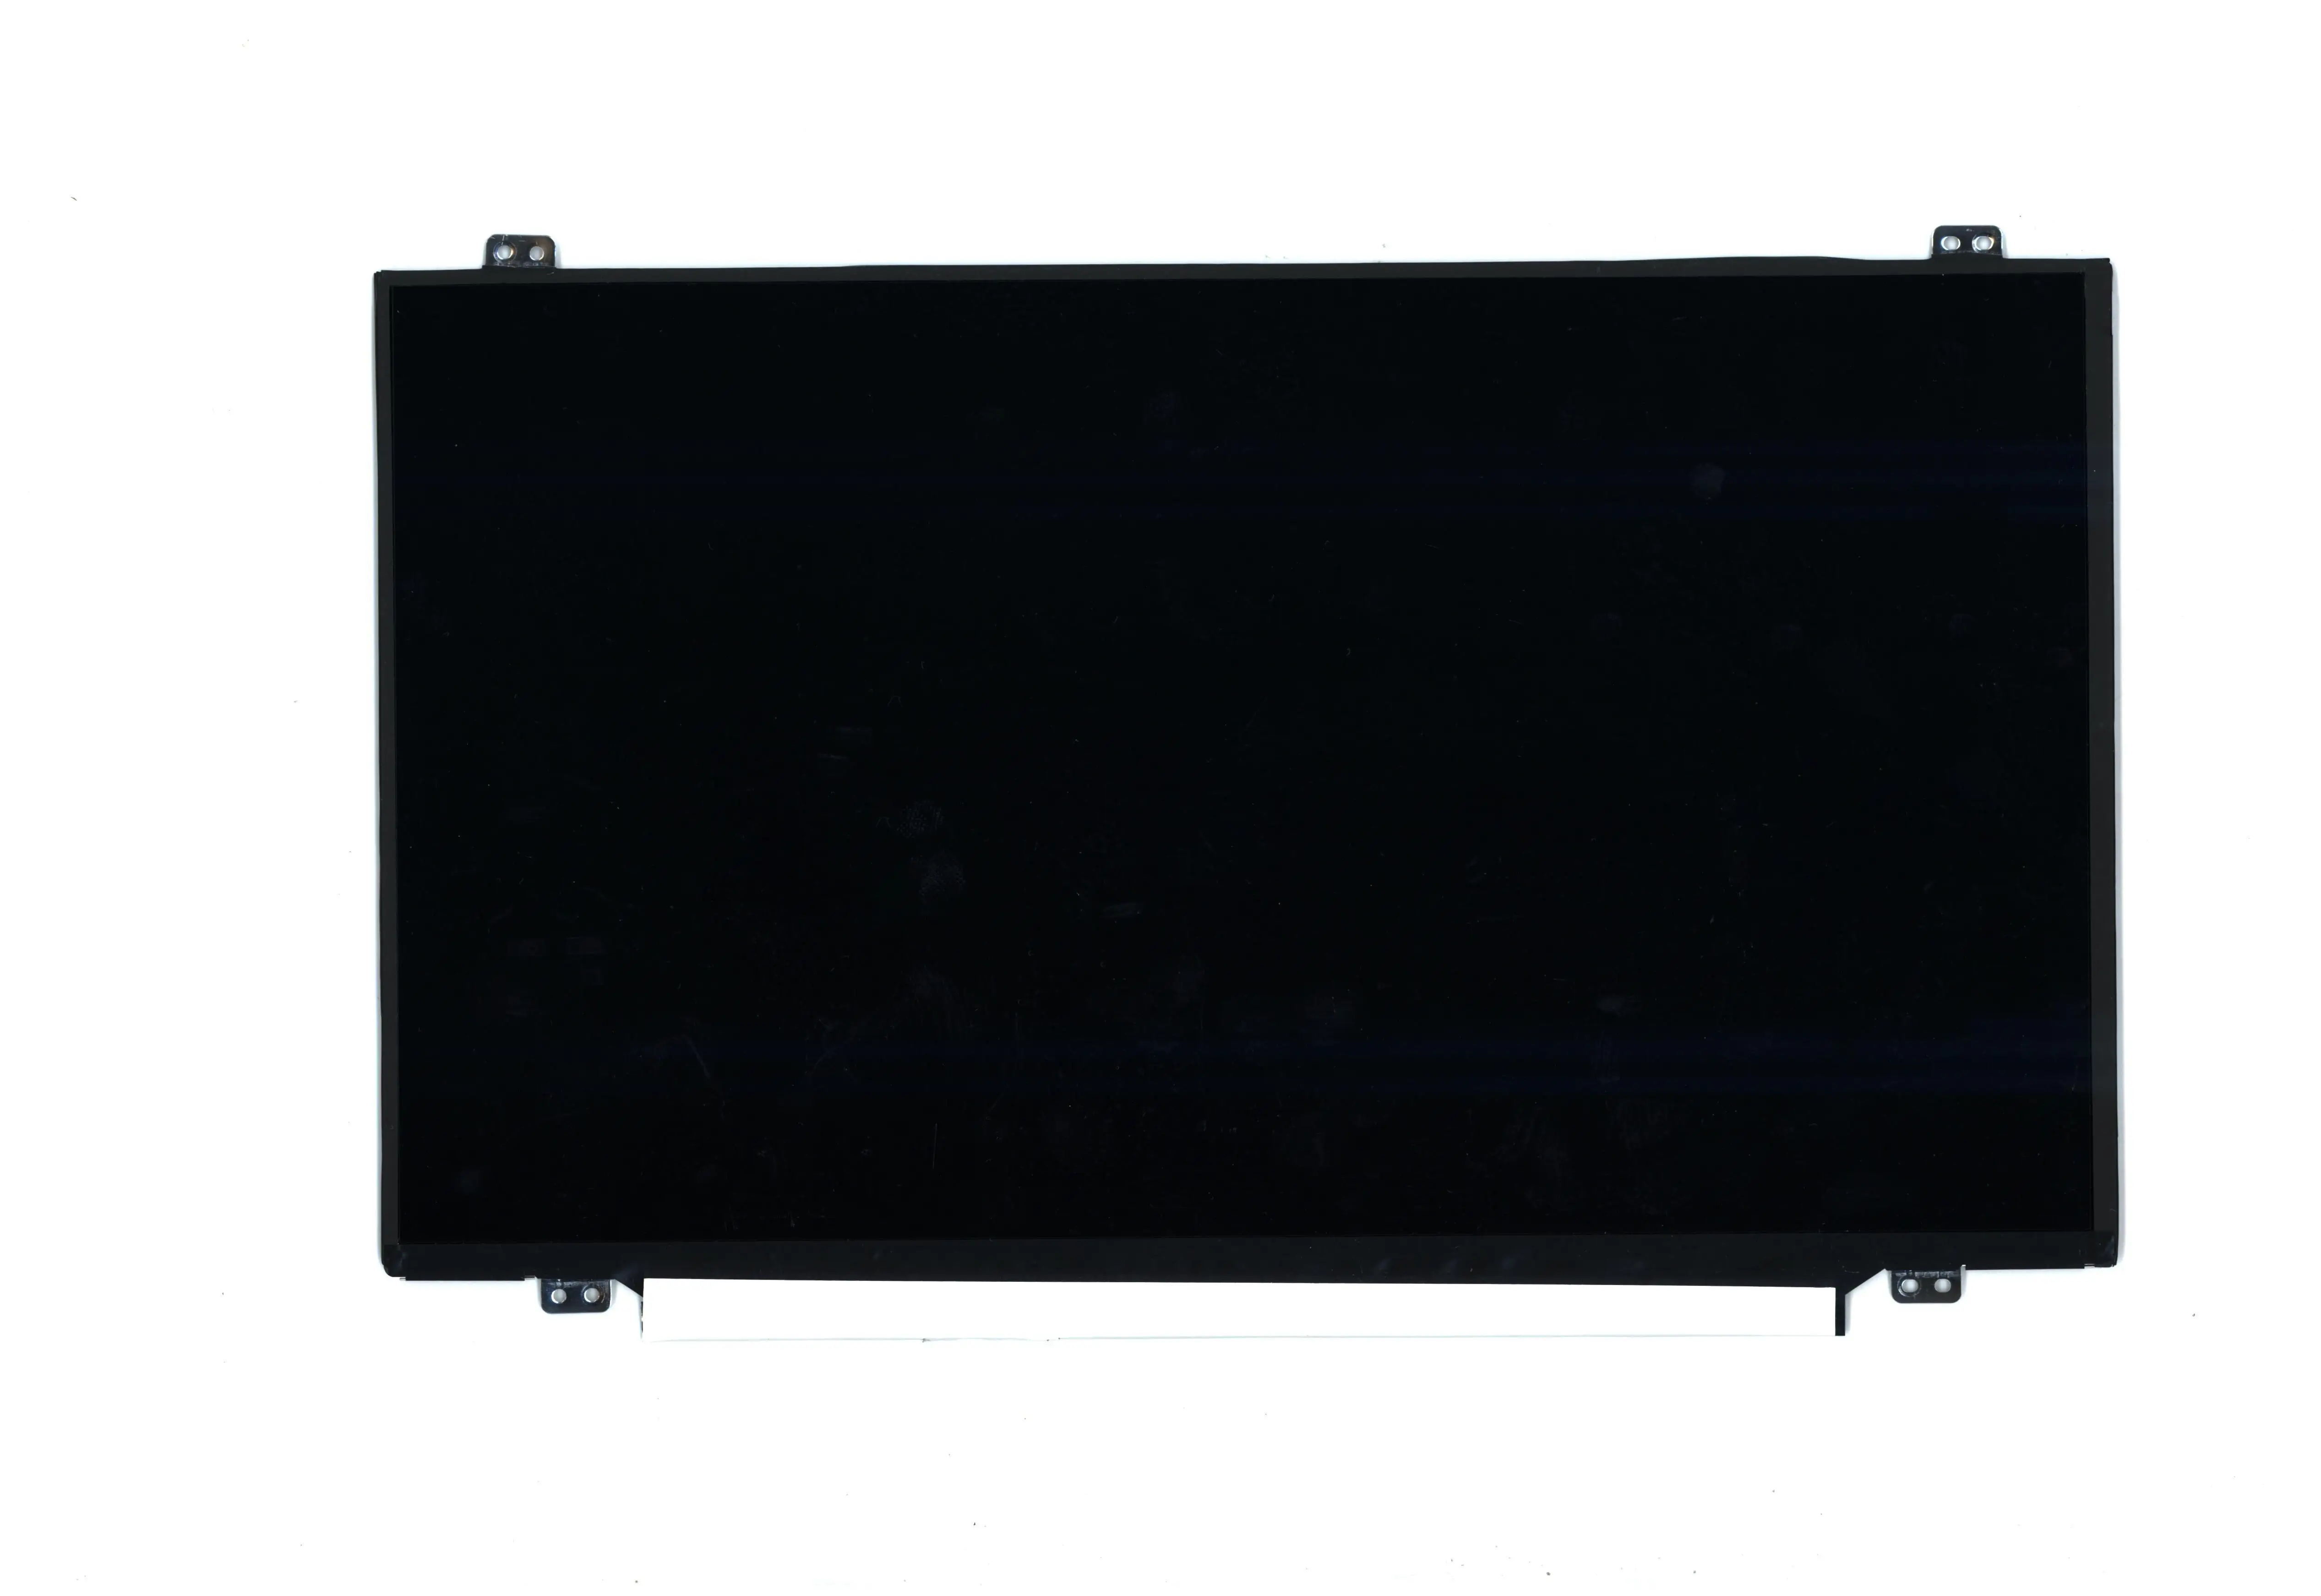 

New LCD Screen For Thinkpad T450 T460P T470S 1920*1080 14.0"30pin FHD LCD Screen 00PA892 00PA889 02DL764 02DL609 01AV853 02DA379